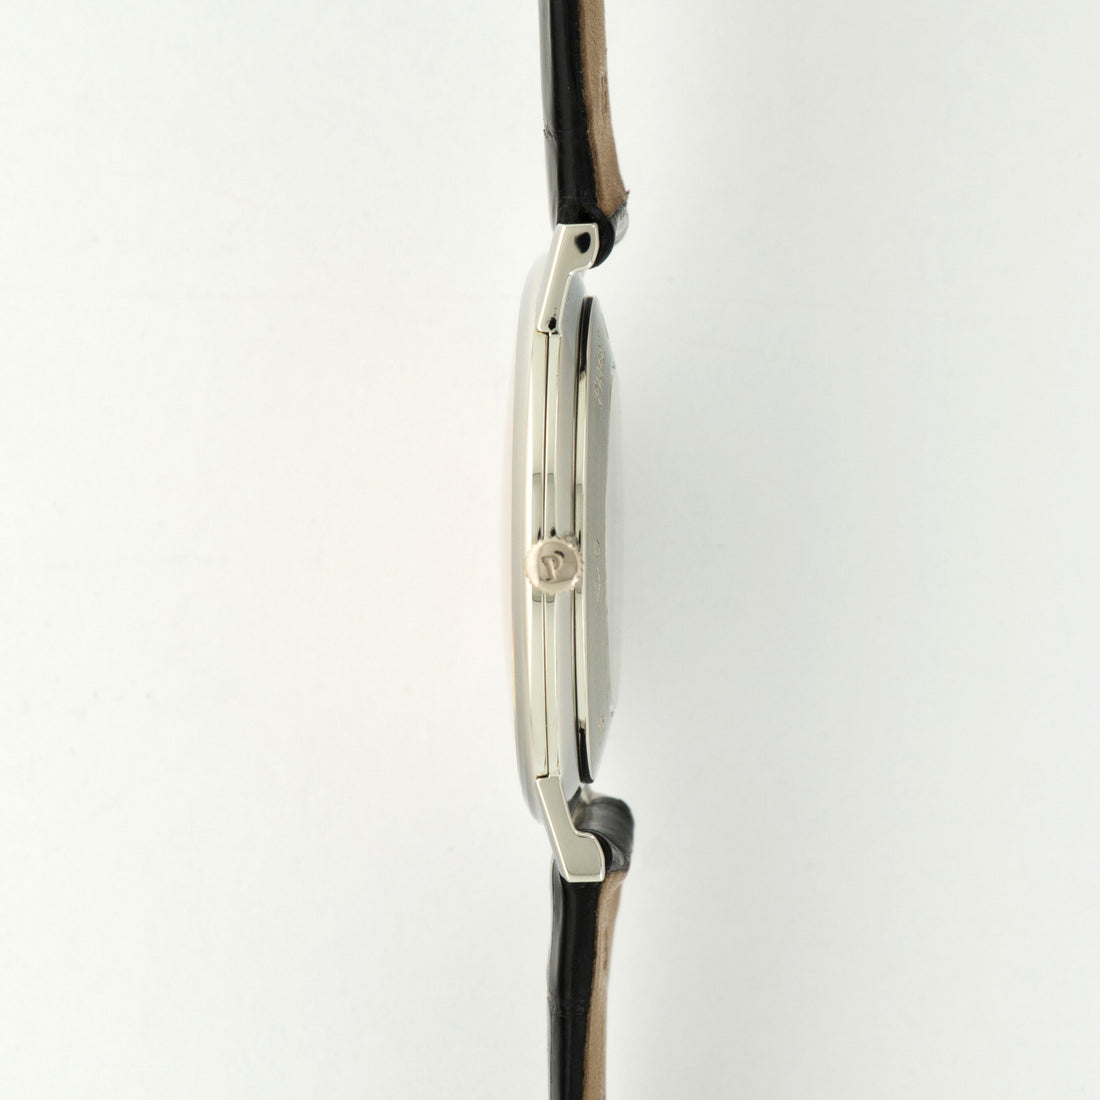 Piaget Platinum Altiplano Ultra Thin Watch Ref. G0A27009